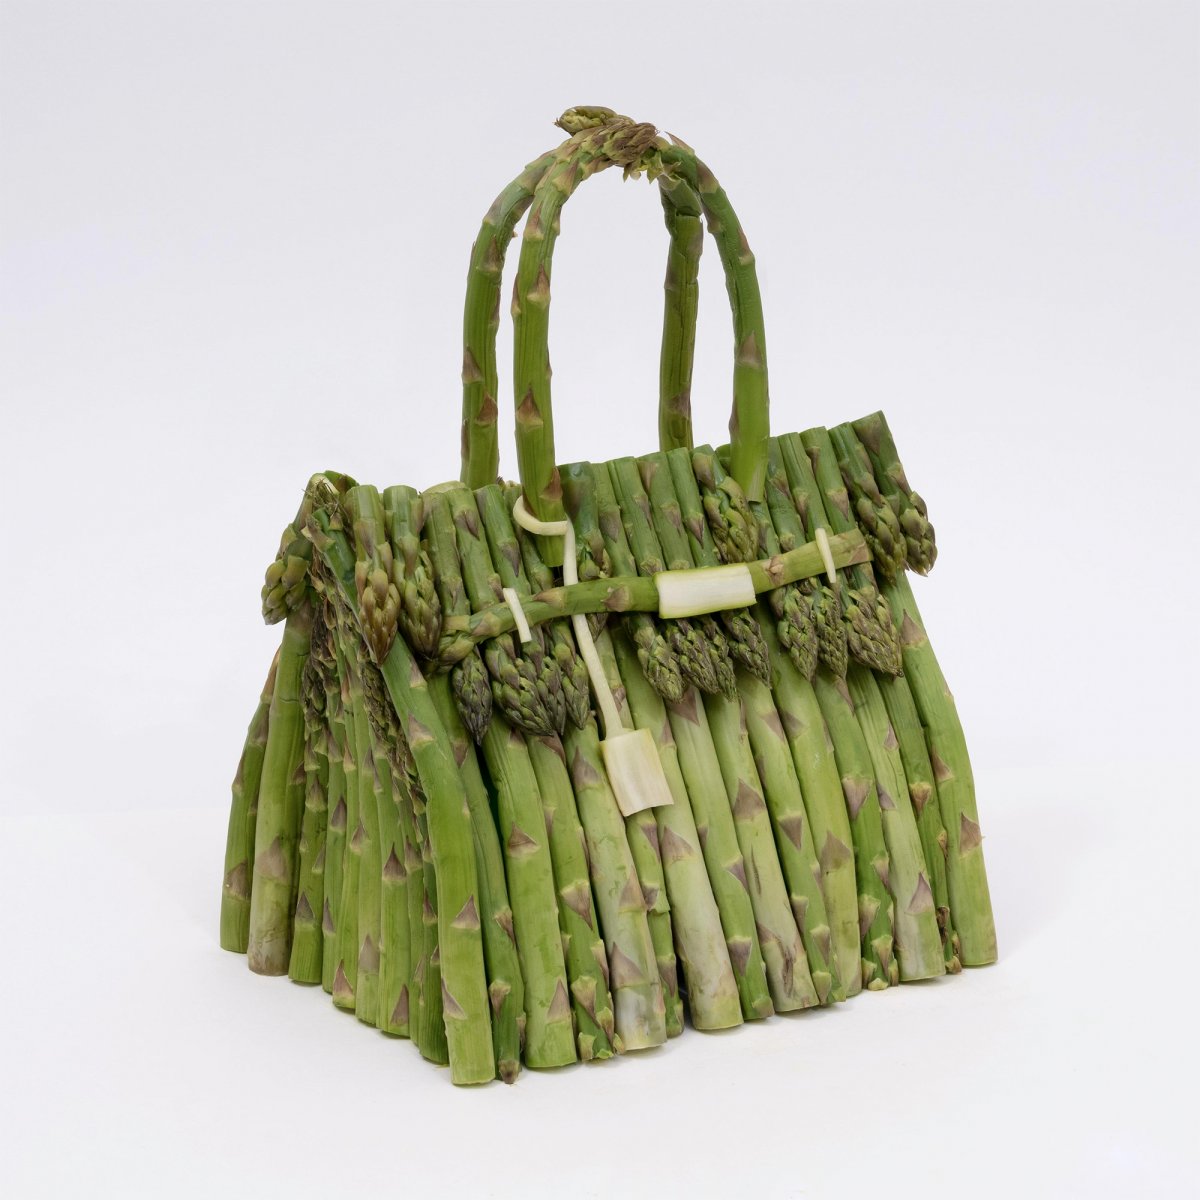 Birkin Bags in vegetable versions by Ben Denzer